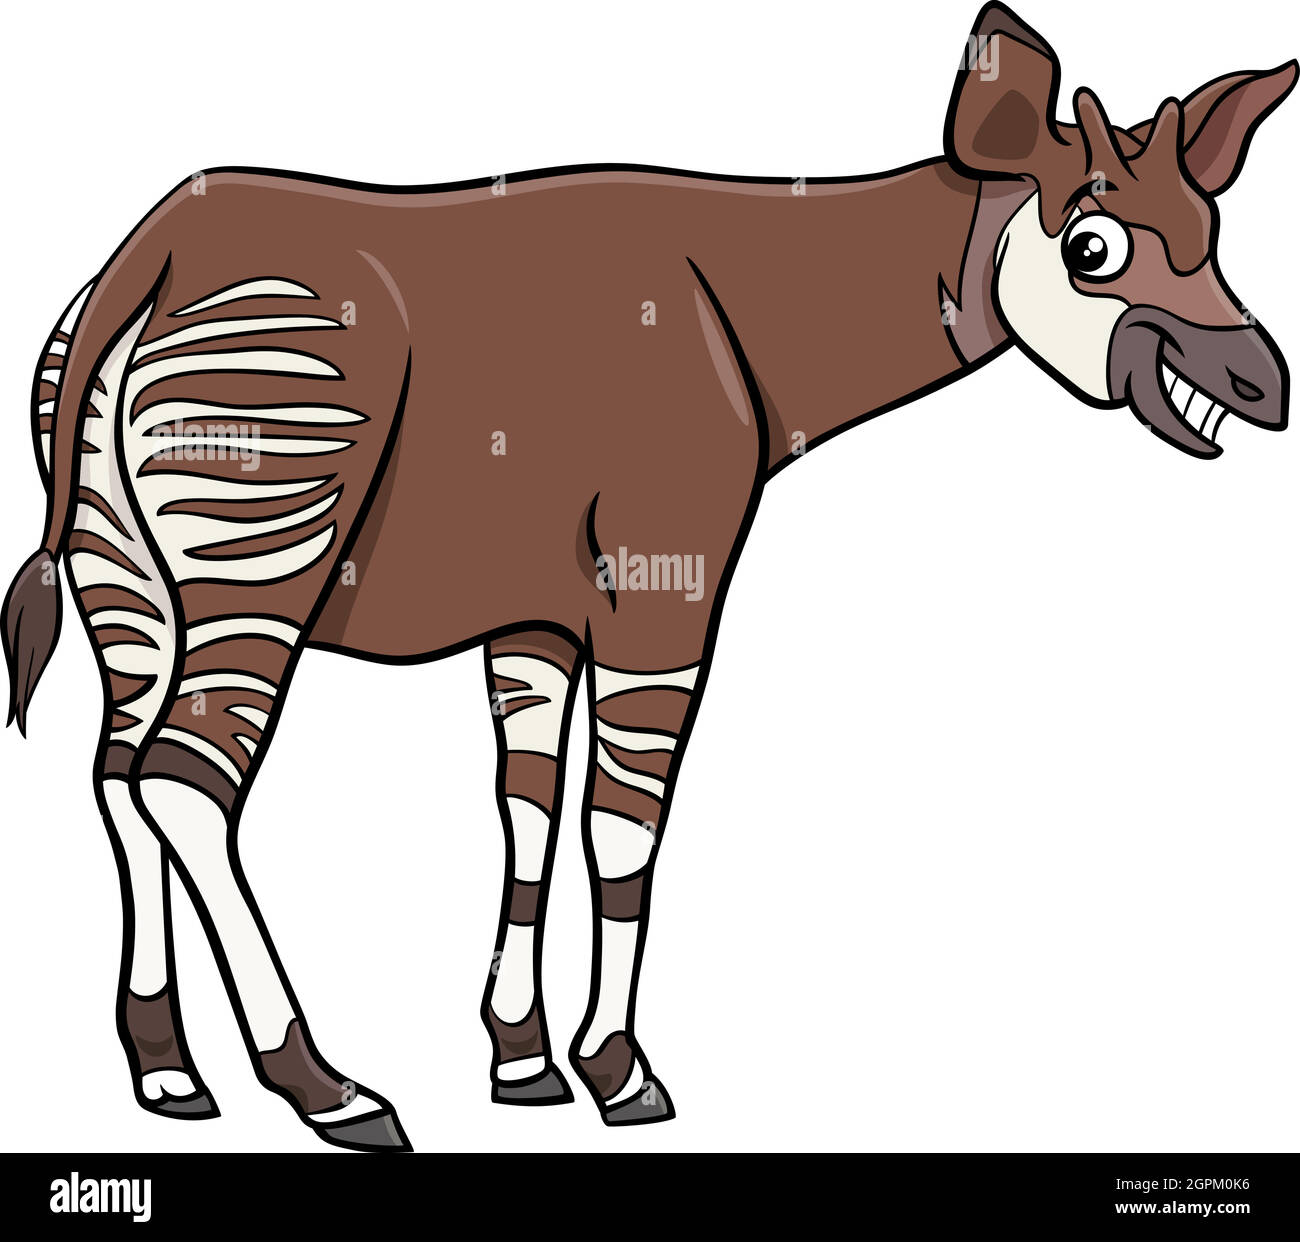 cartoon okapi comic animal character Stock Vector